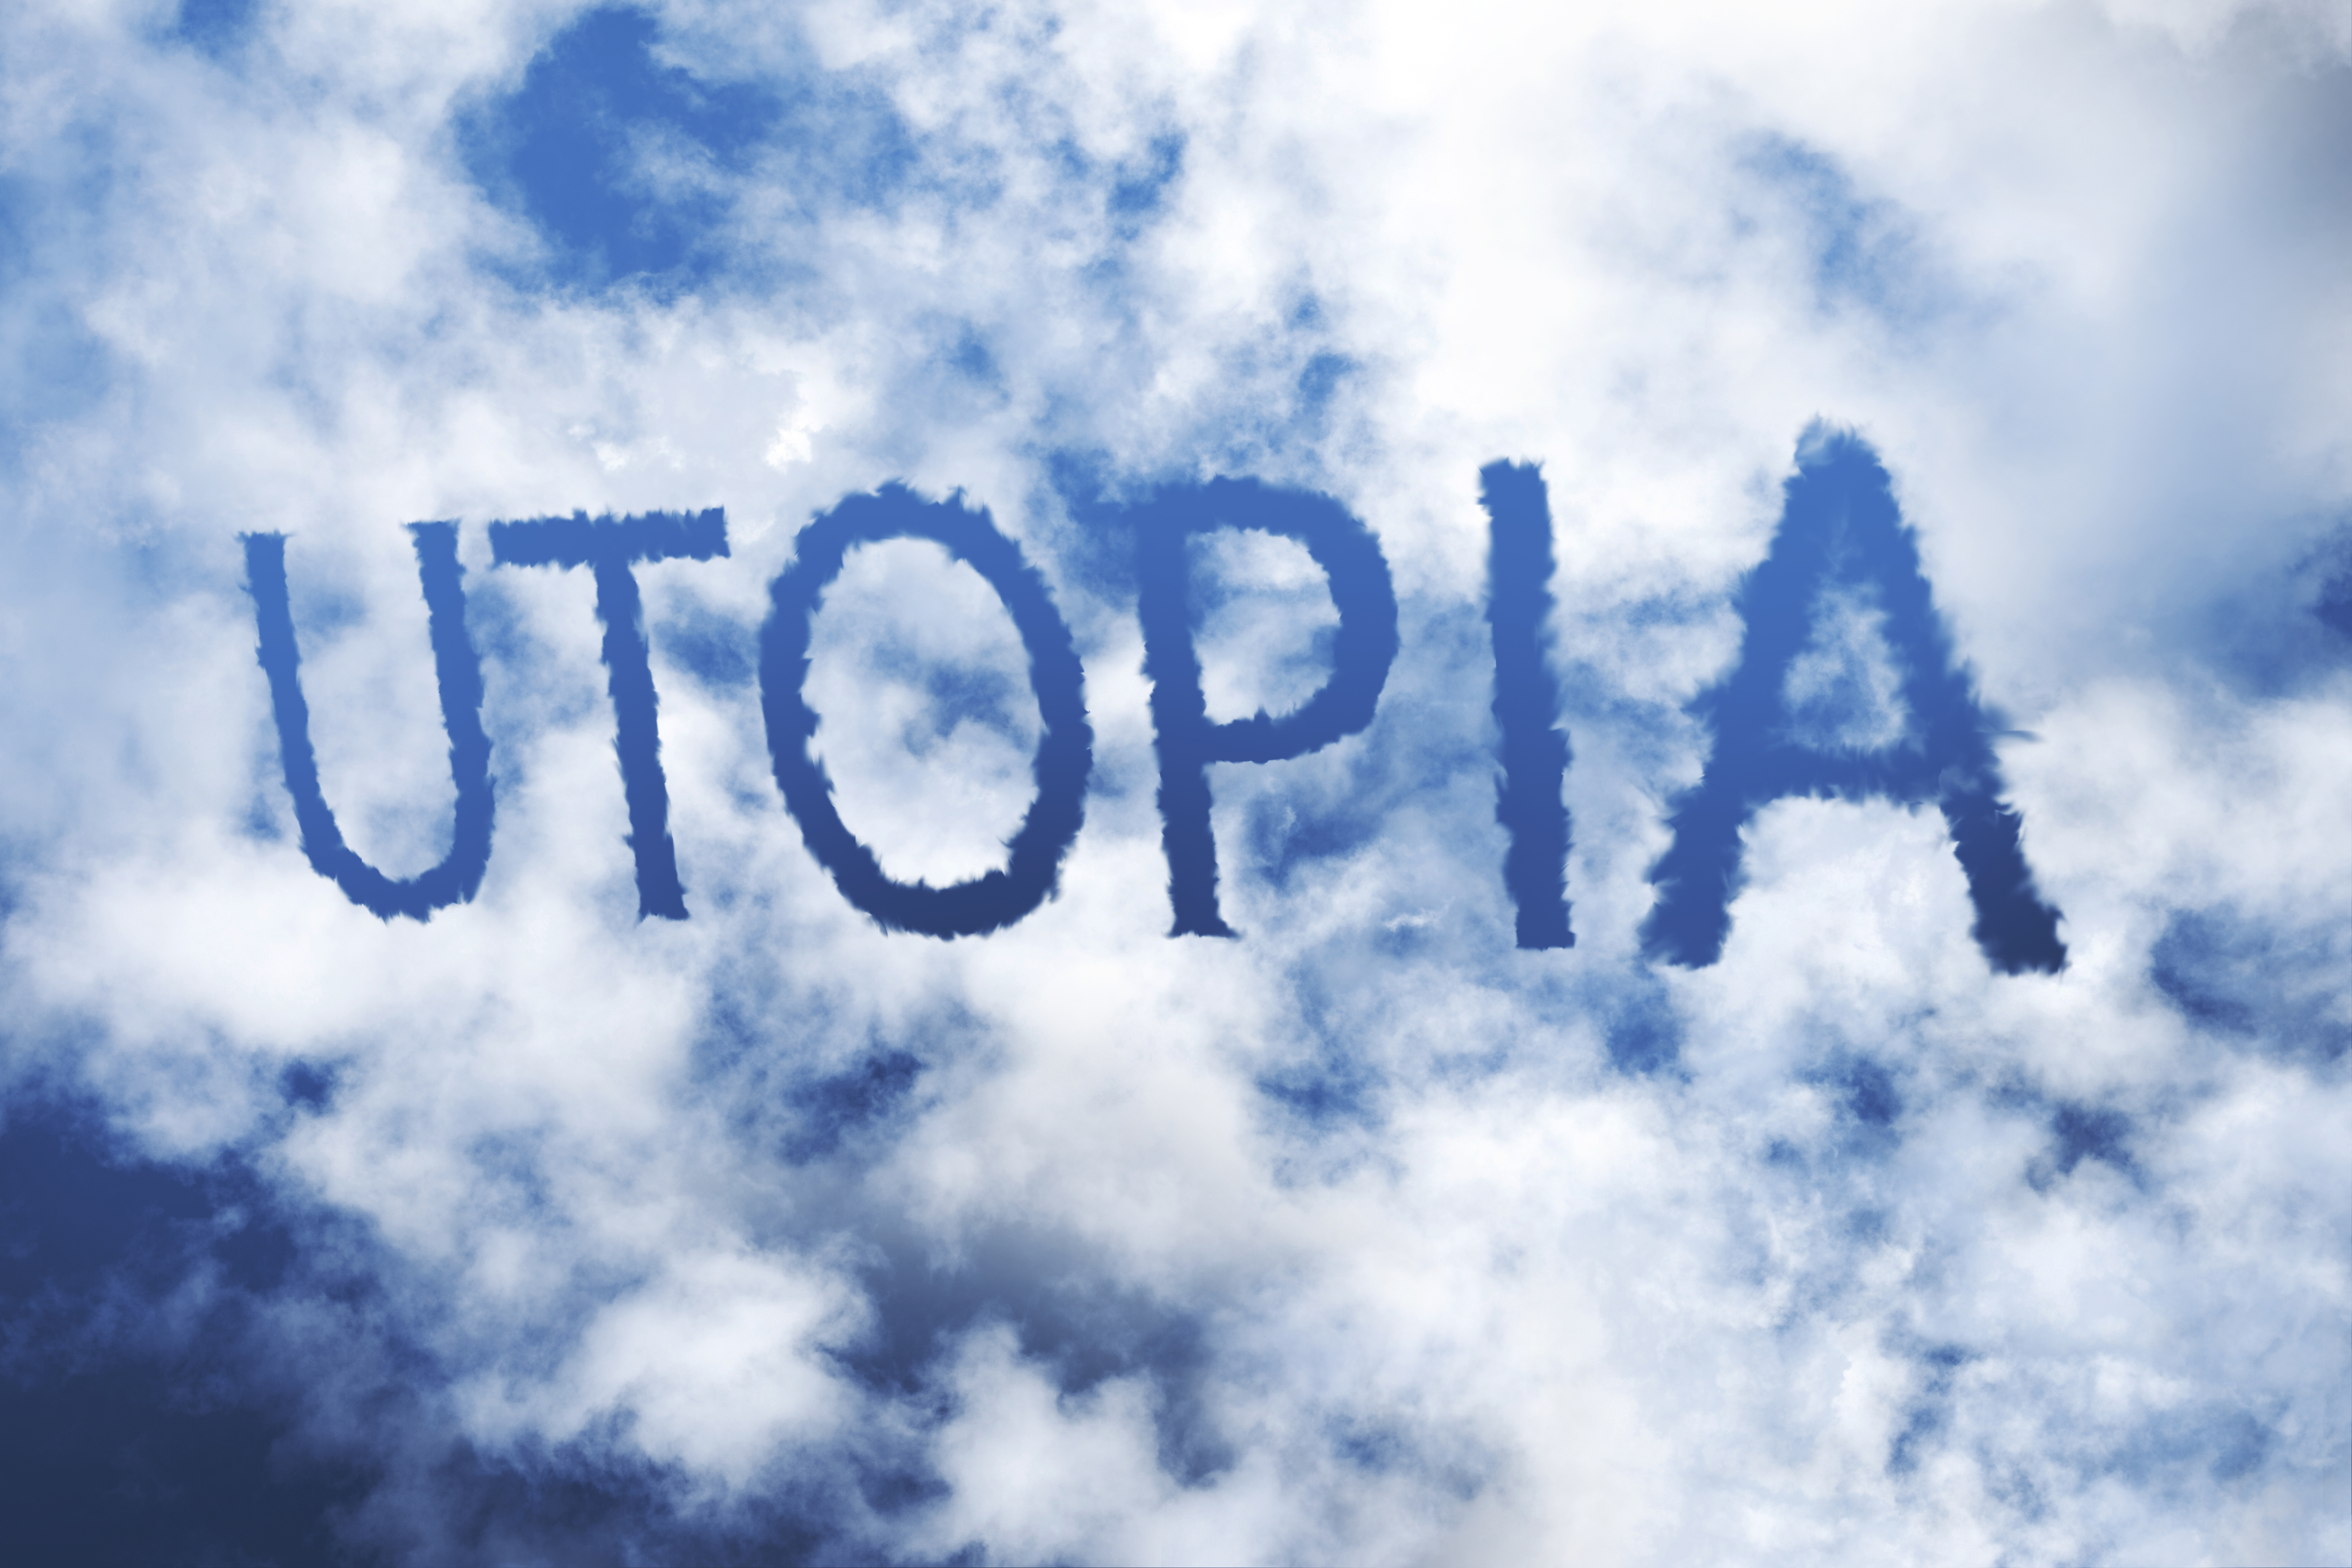 The word "Utopia" is written in the sky. | Source: Shutterstock